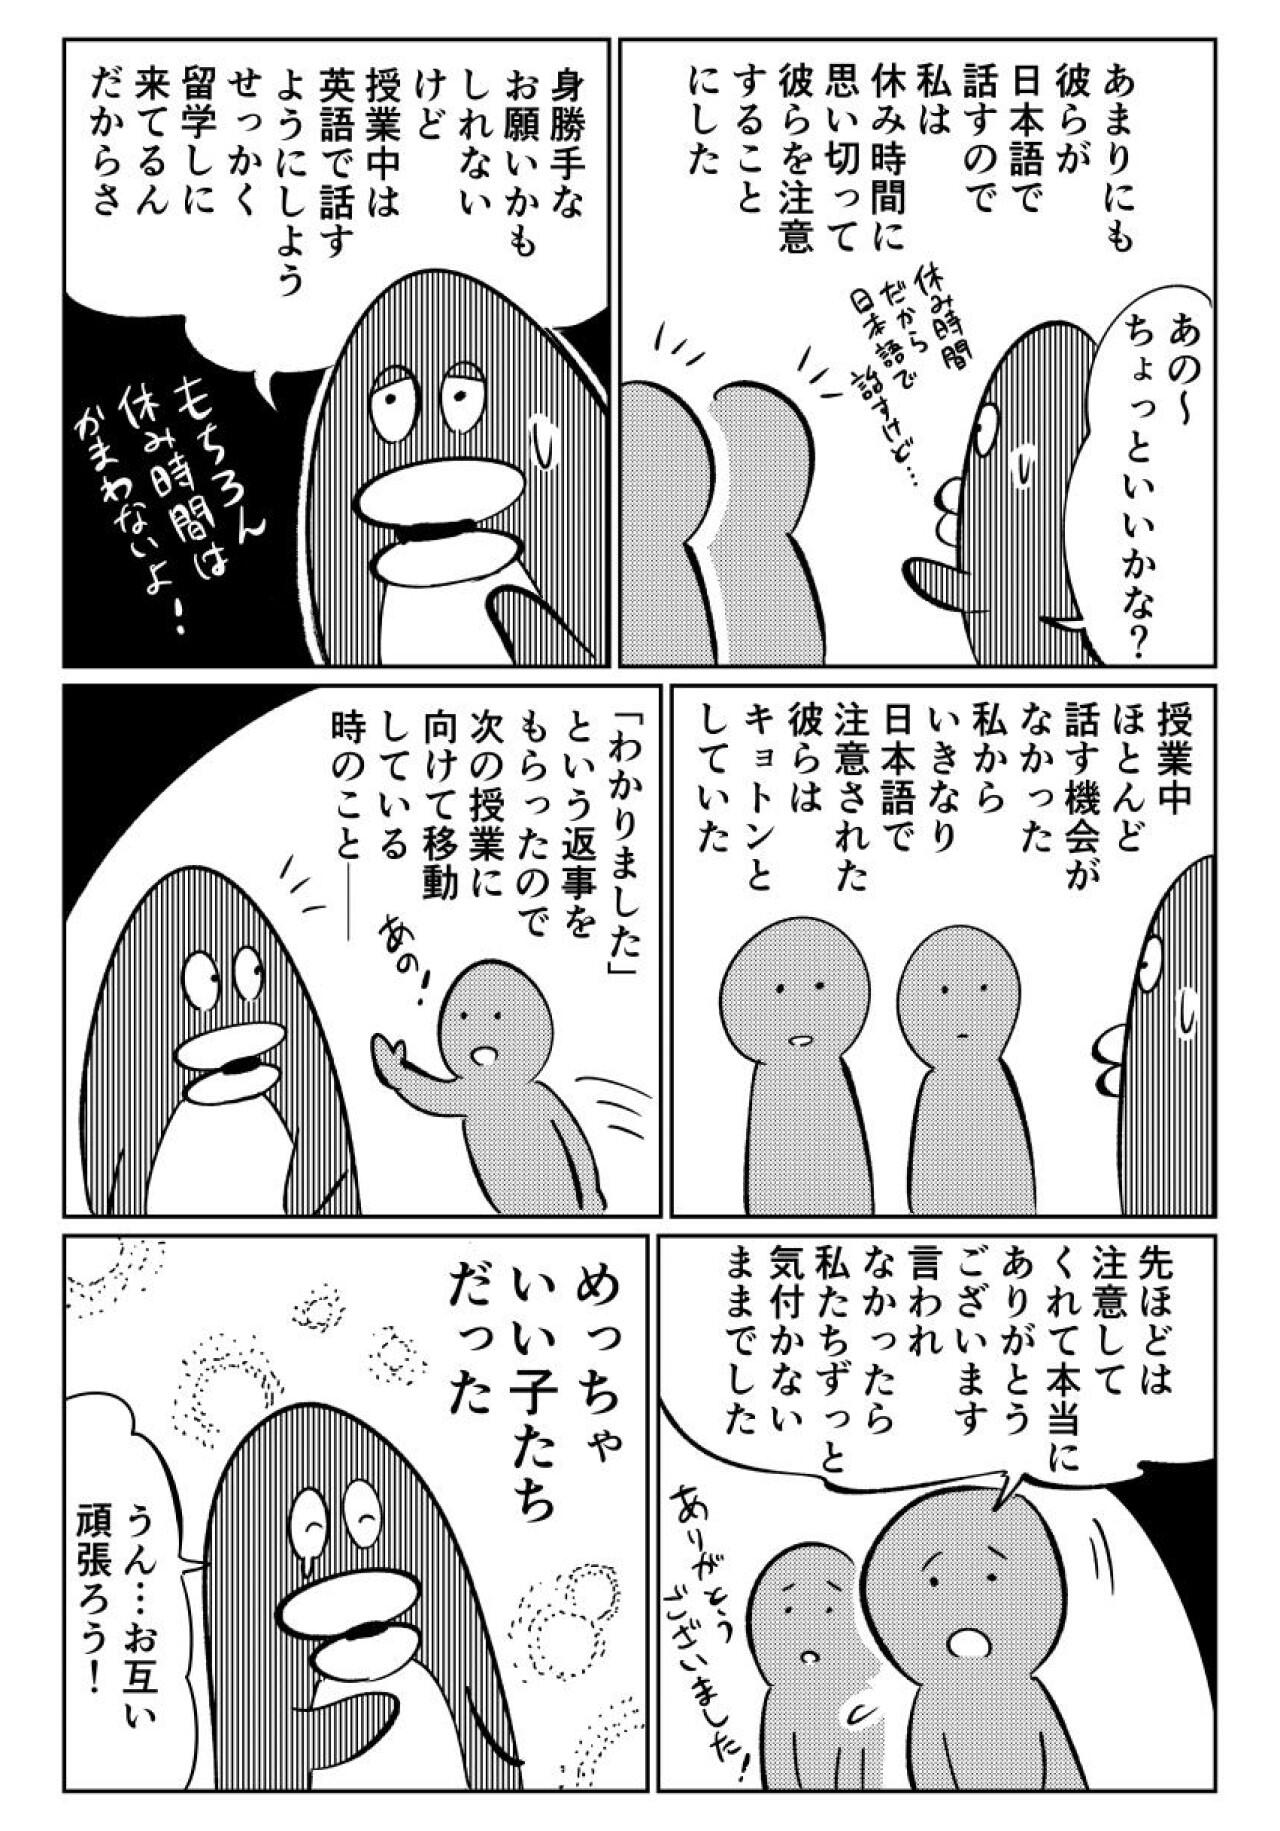 https://www.ryugaku.co.jp/column/images/34sai6_3_1280.jpg